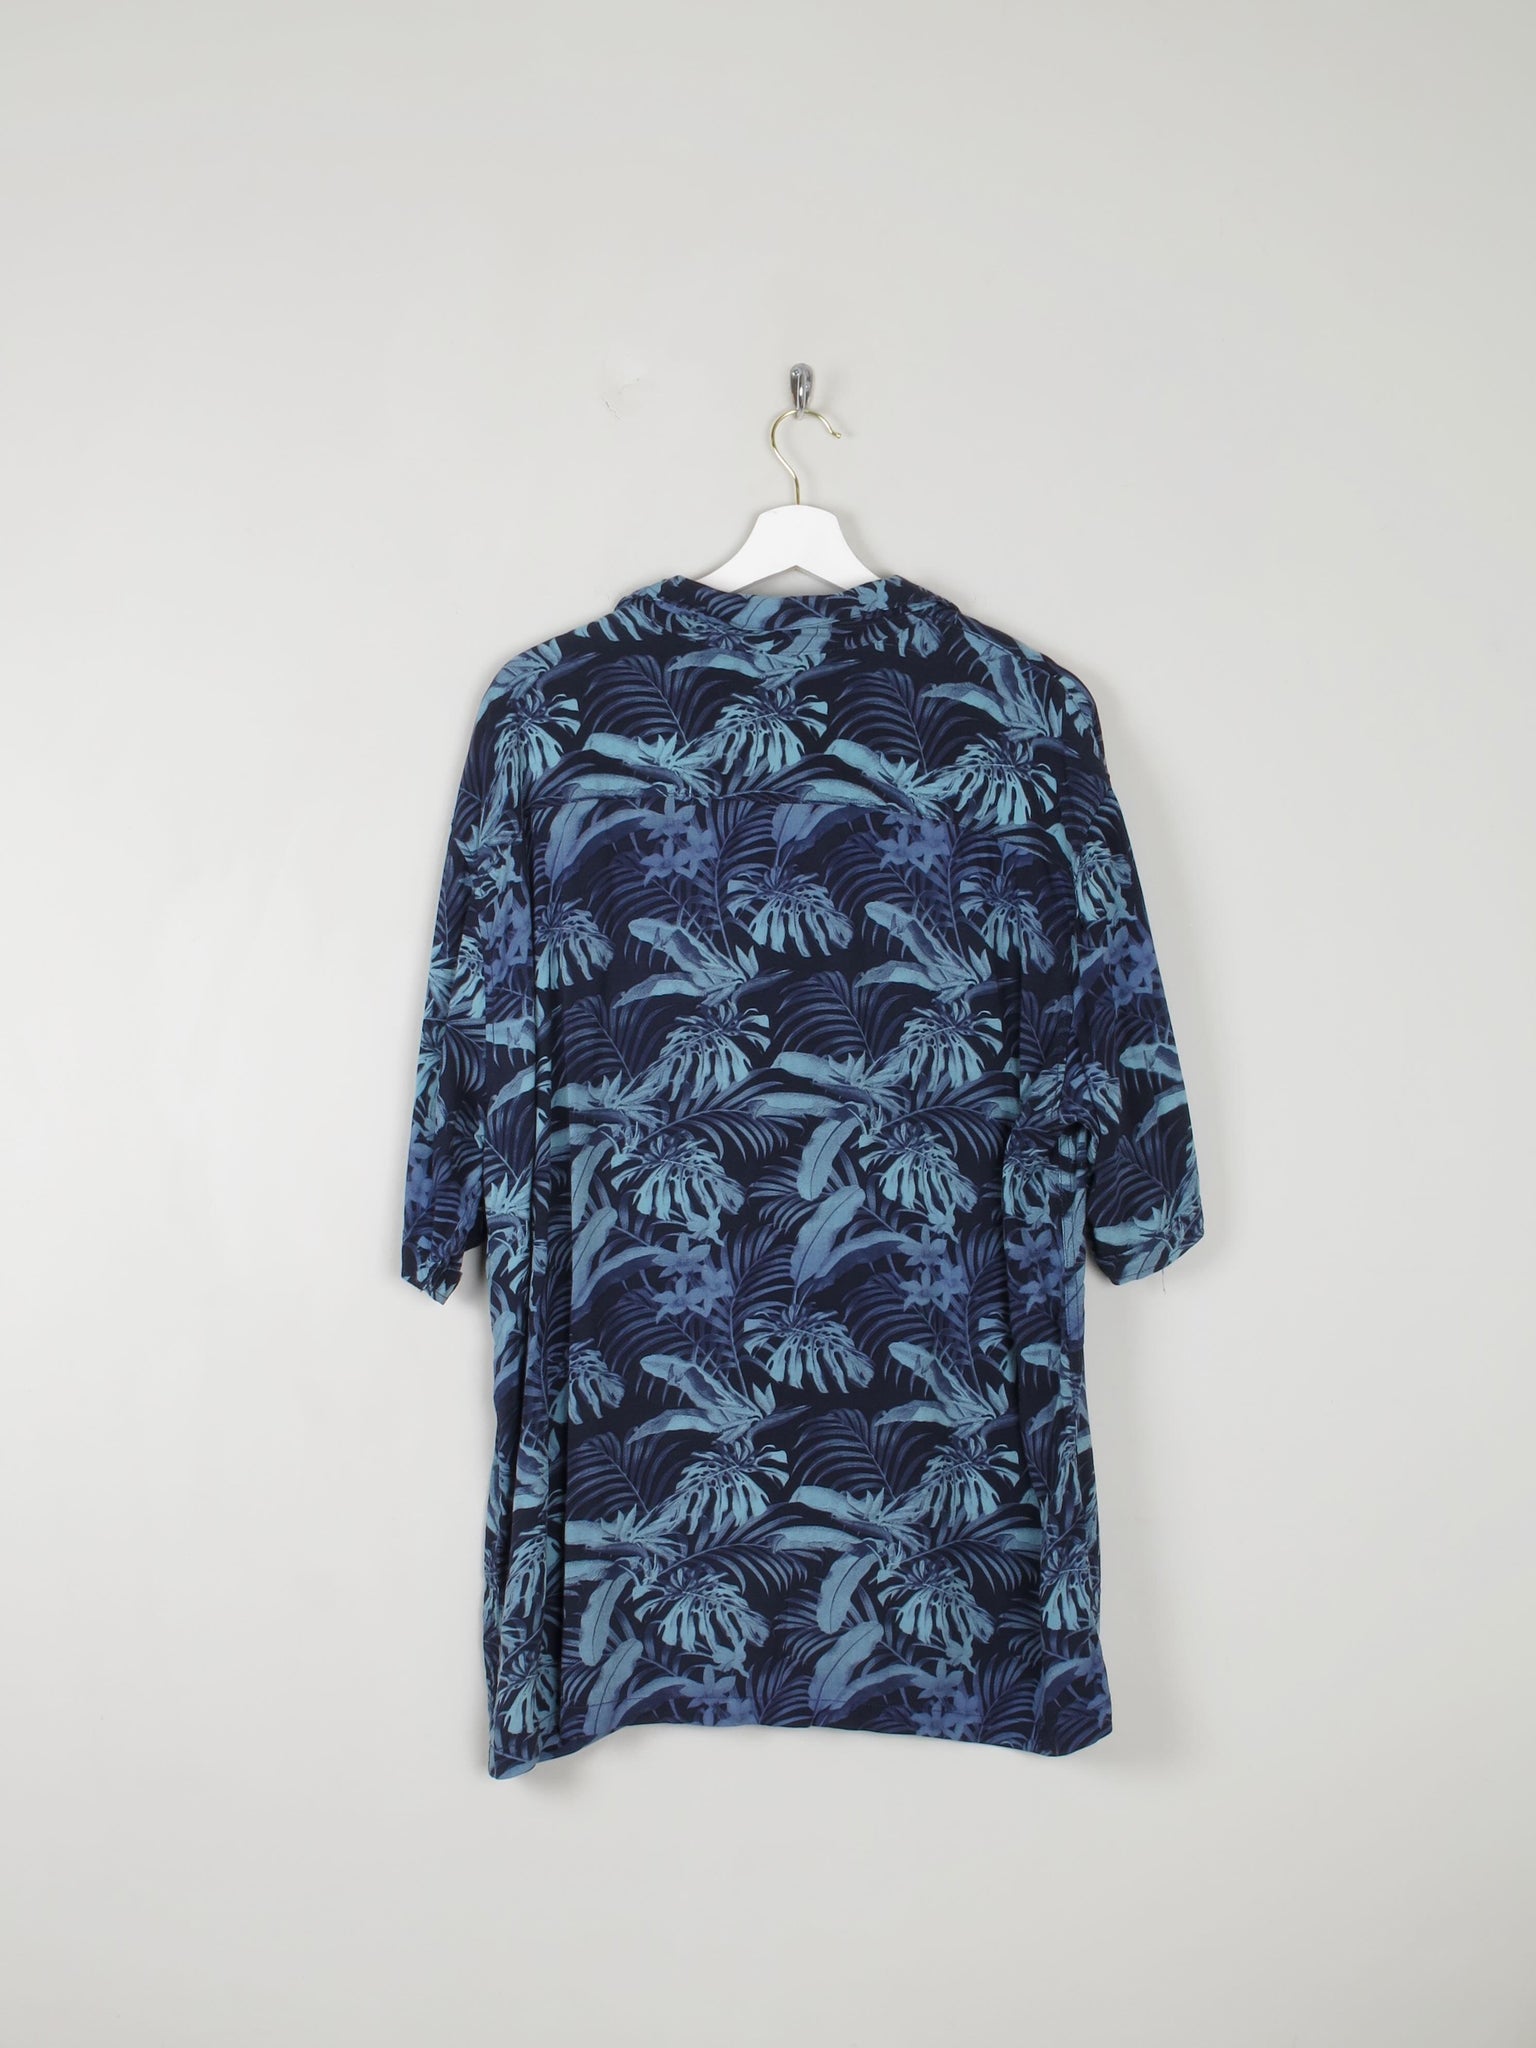 Men's Blue Printed Hawaiian Shirt L - The Harlequin